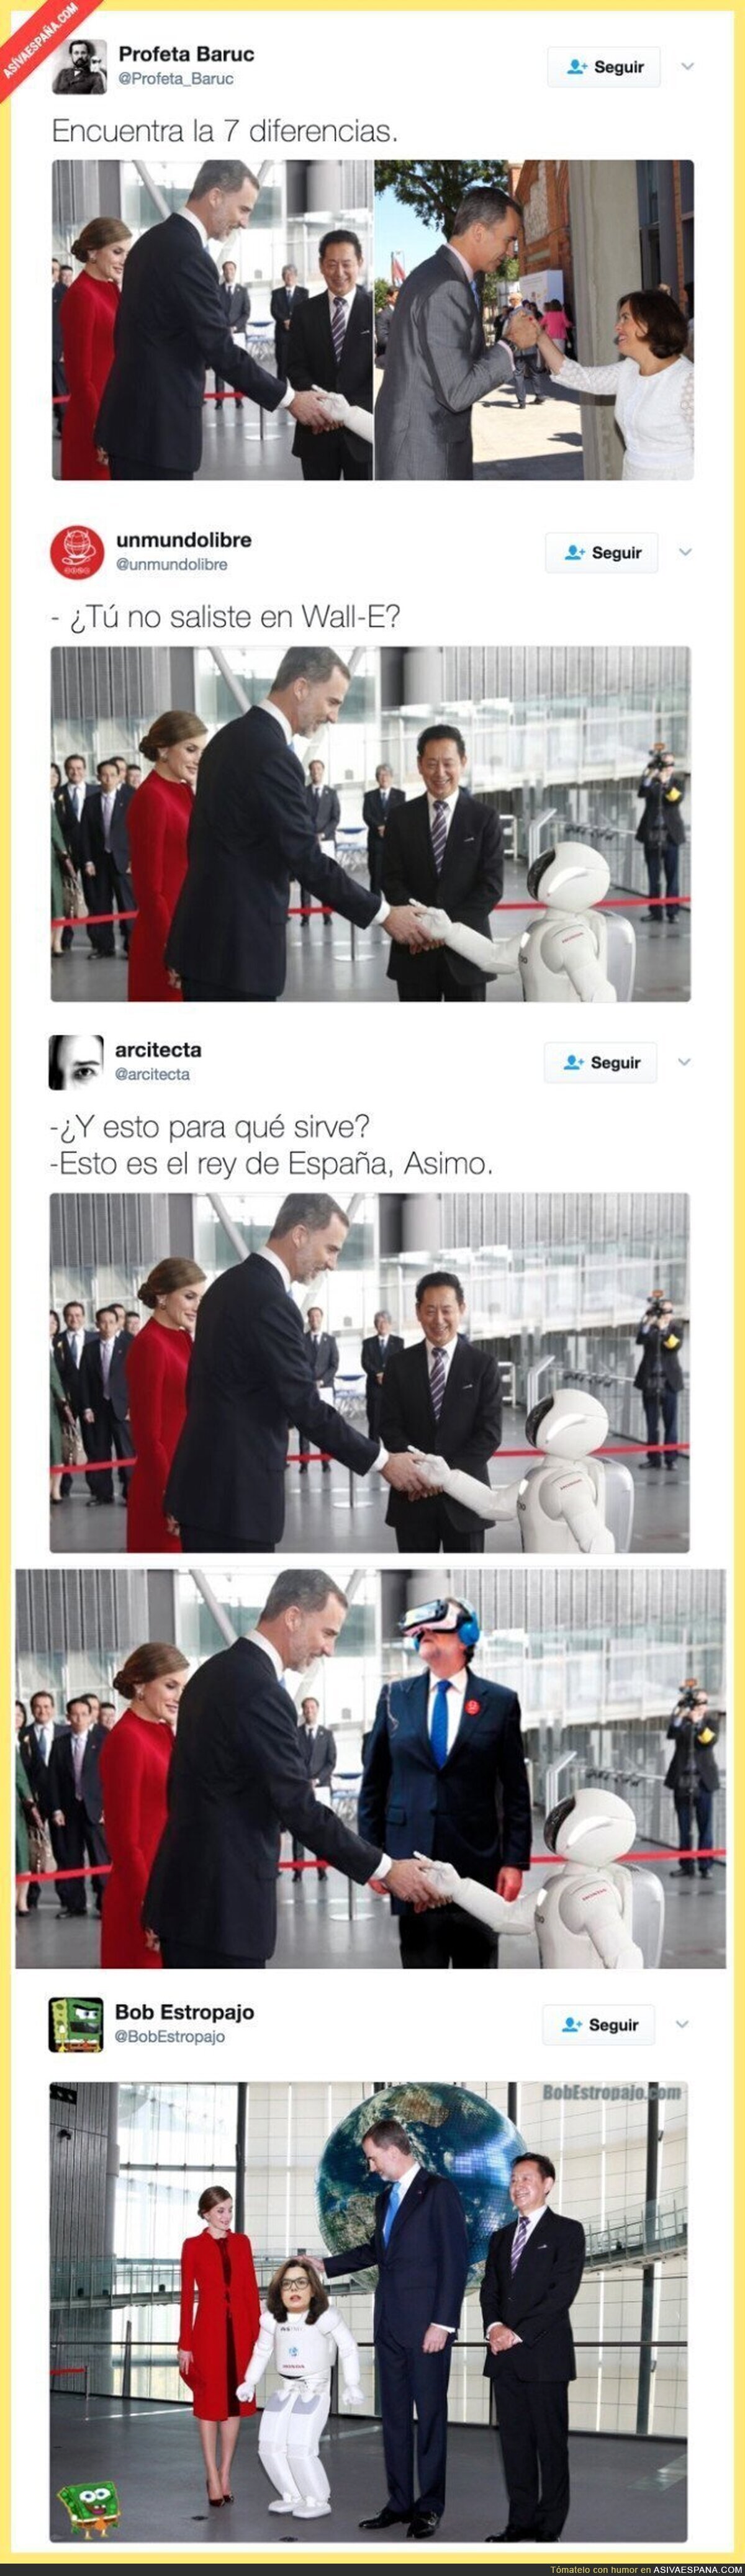 Felipe VI se ha reunido con el robot Asimo e internet no ha tardado en reaccionar